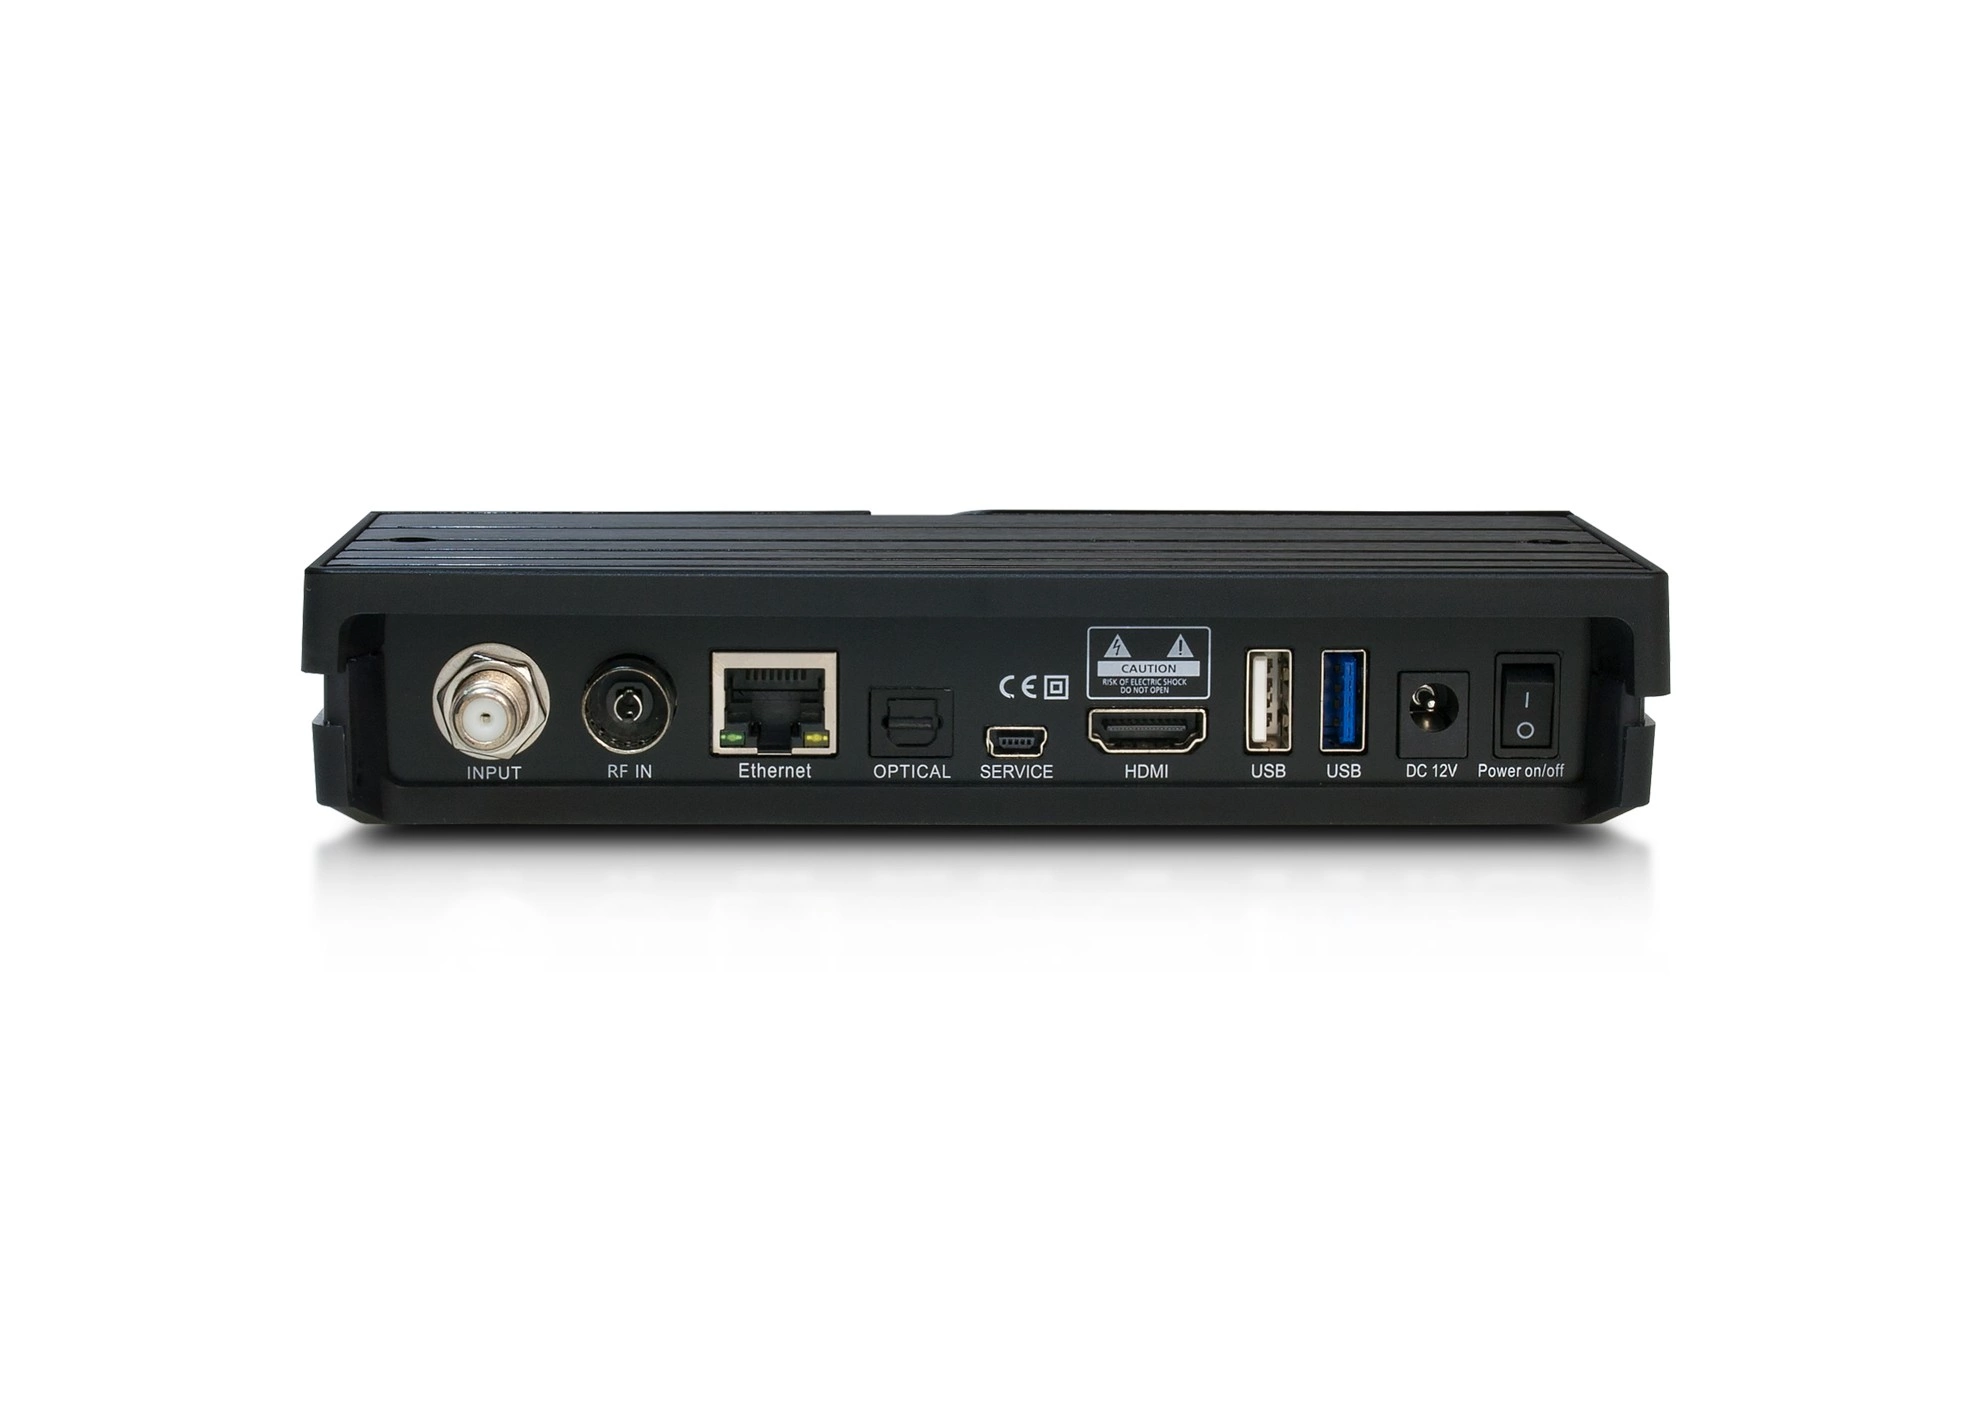 Dreambox ONE Combo UHD 4K (DVB-S2X, DVB-C/T2)